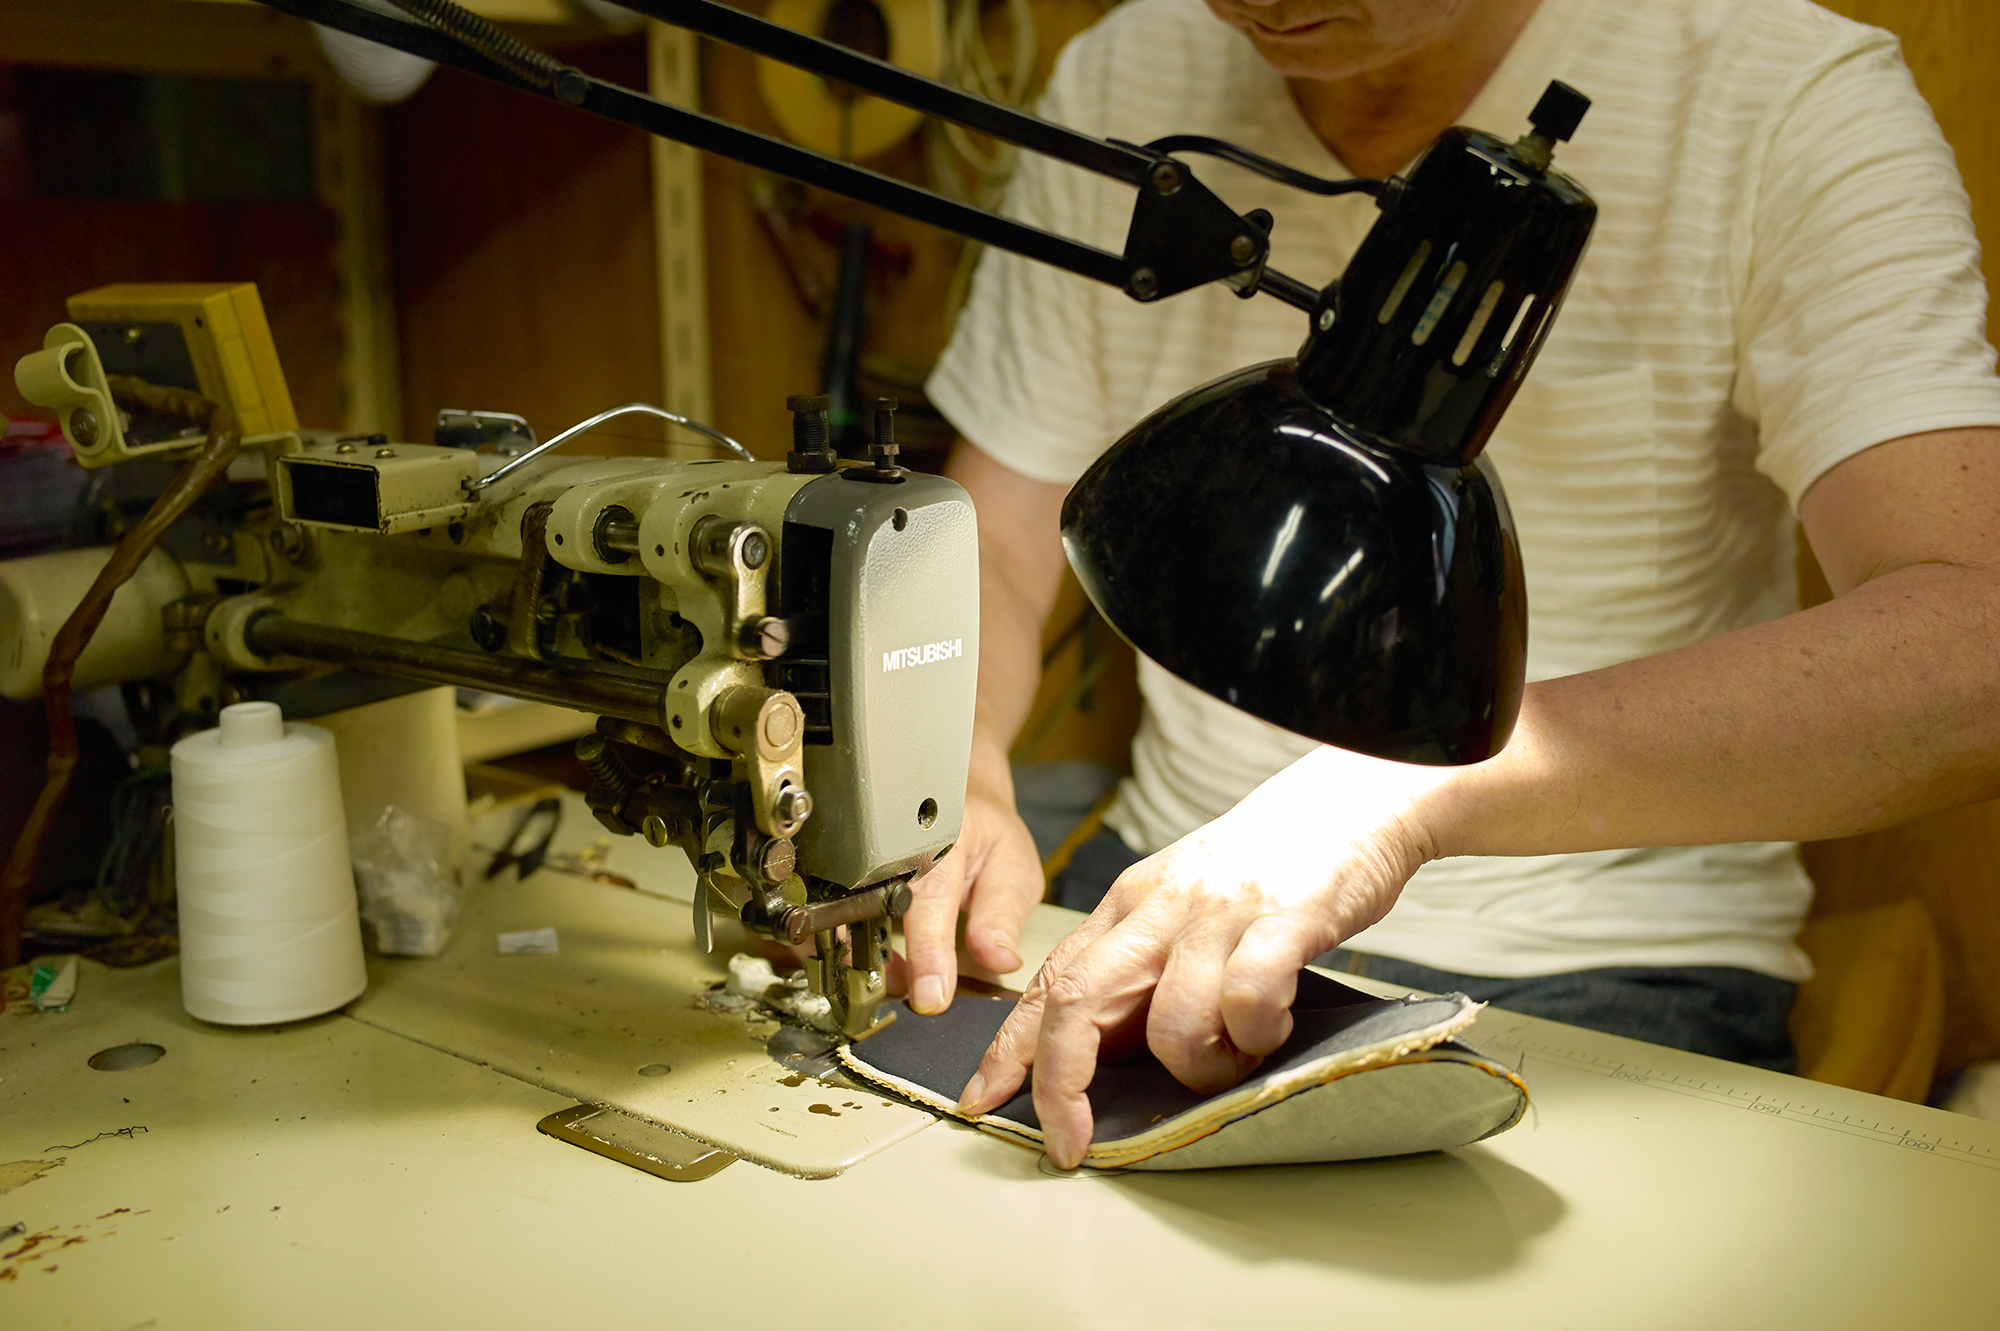 Slippers were Created in Yaesu, Tokyo